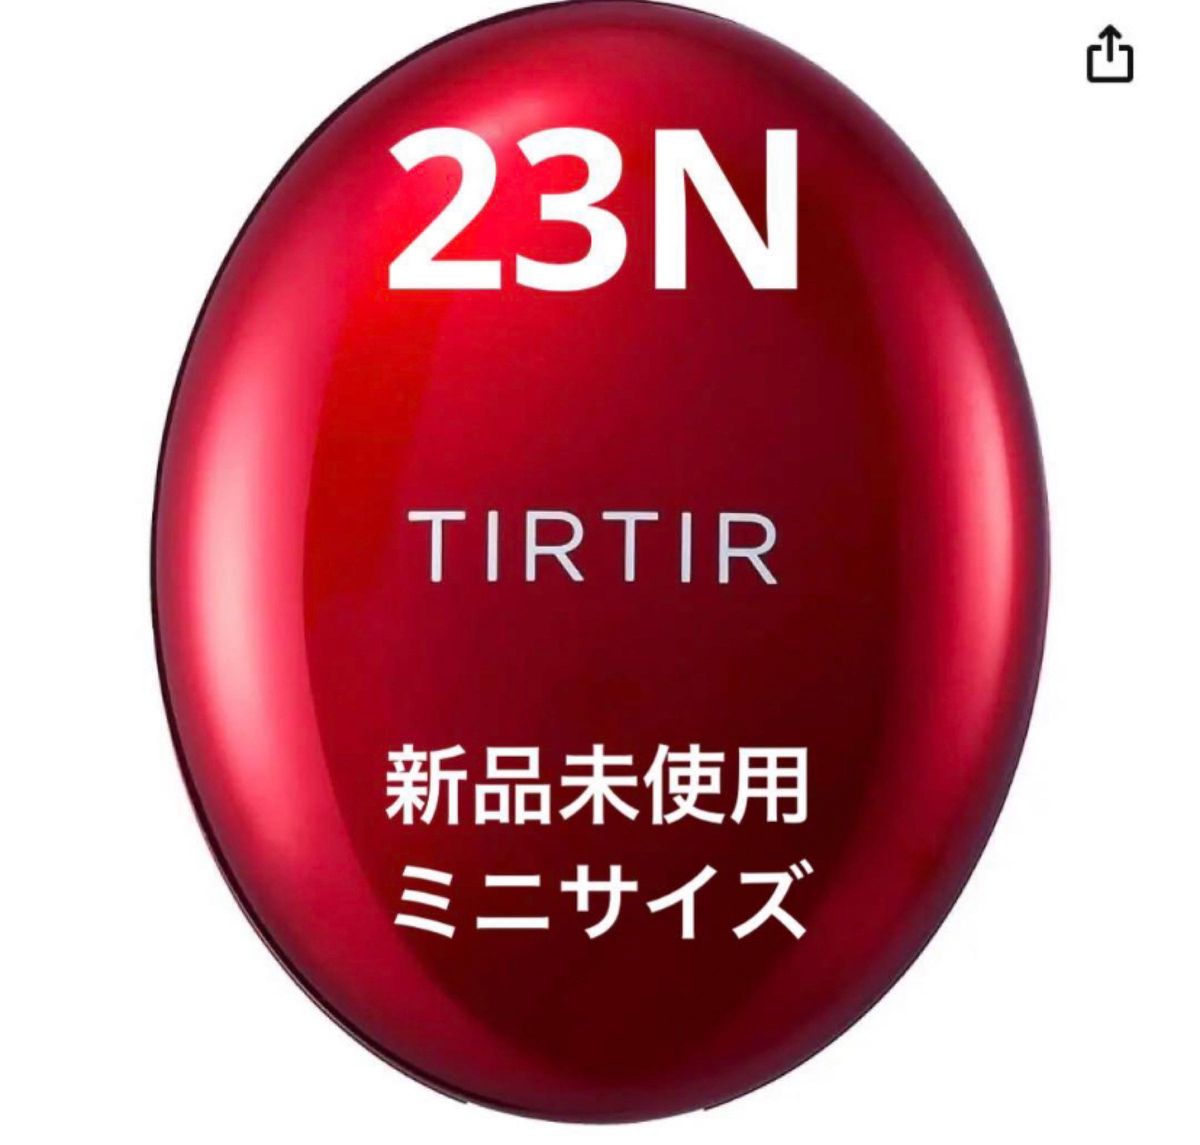 【TIRTIR】MASK FIT RED CUSHION  23N